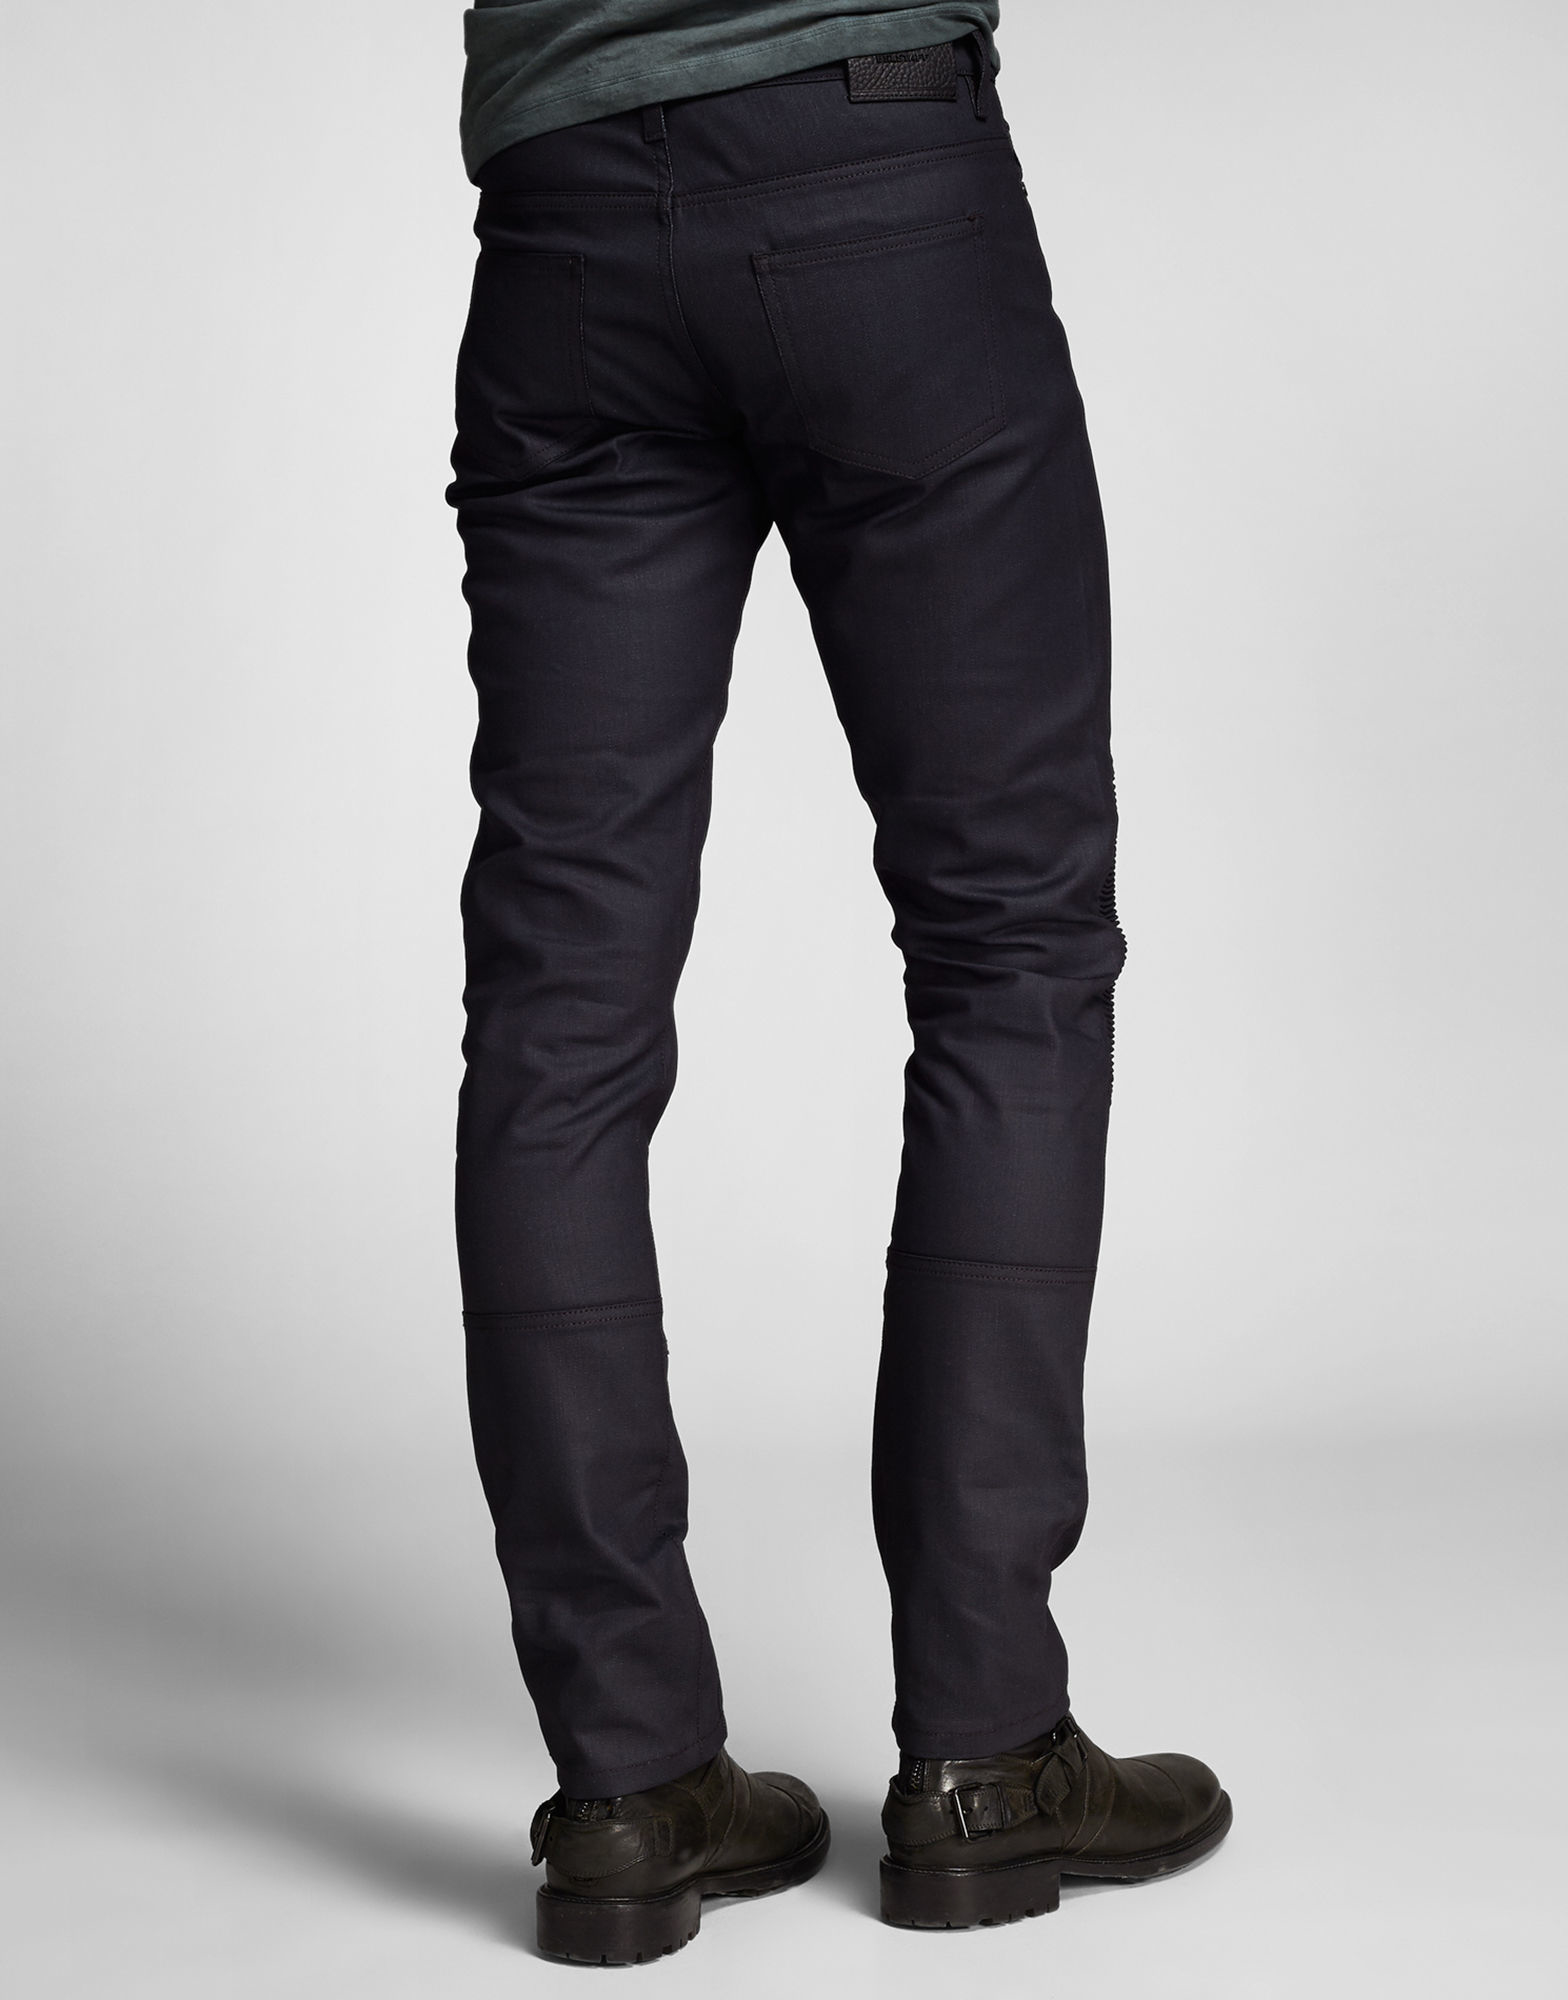 Belstaff Blackrod Jeans in Dark Navy (Blue) for Men - Lyst